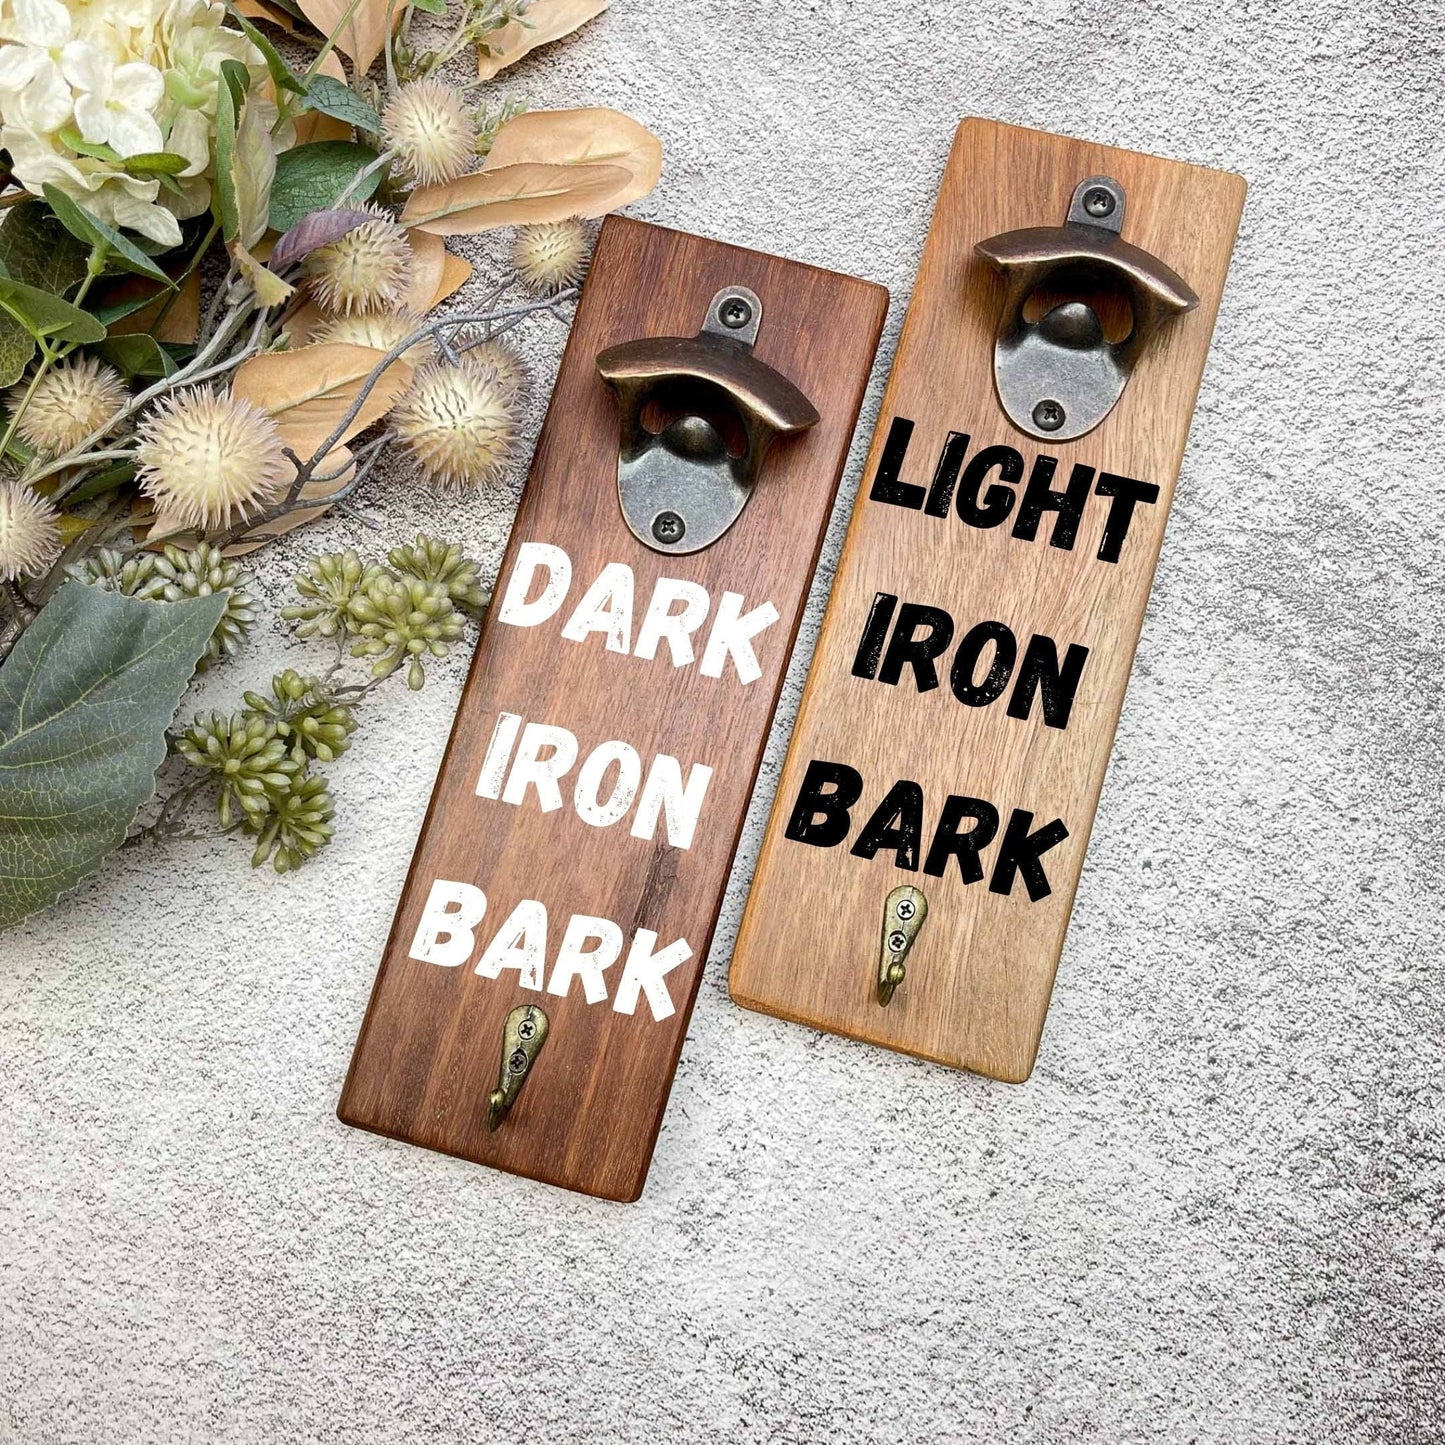 Play with fire bottle opener sign, Australian ironbark hardwood sign